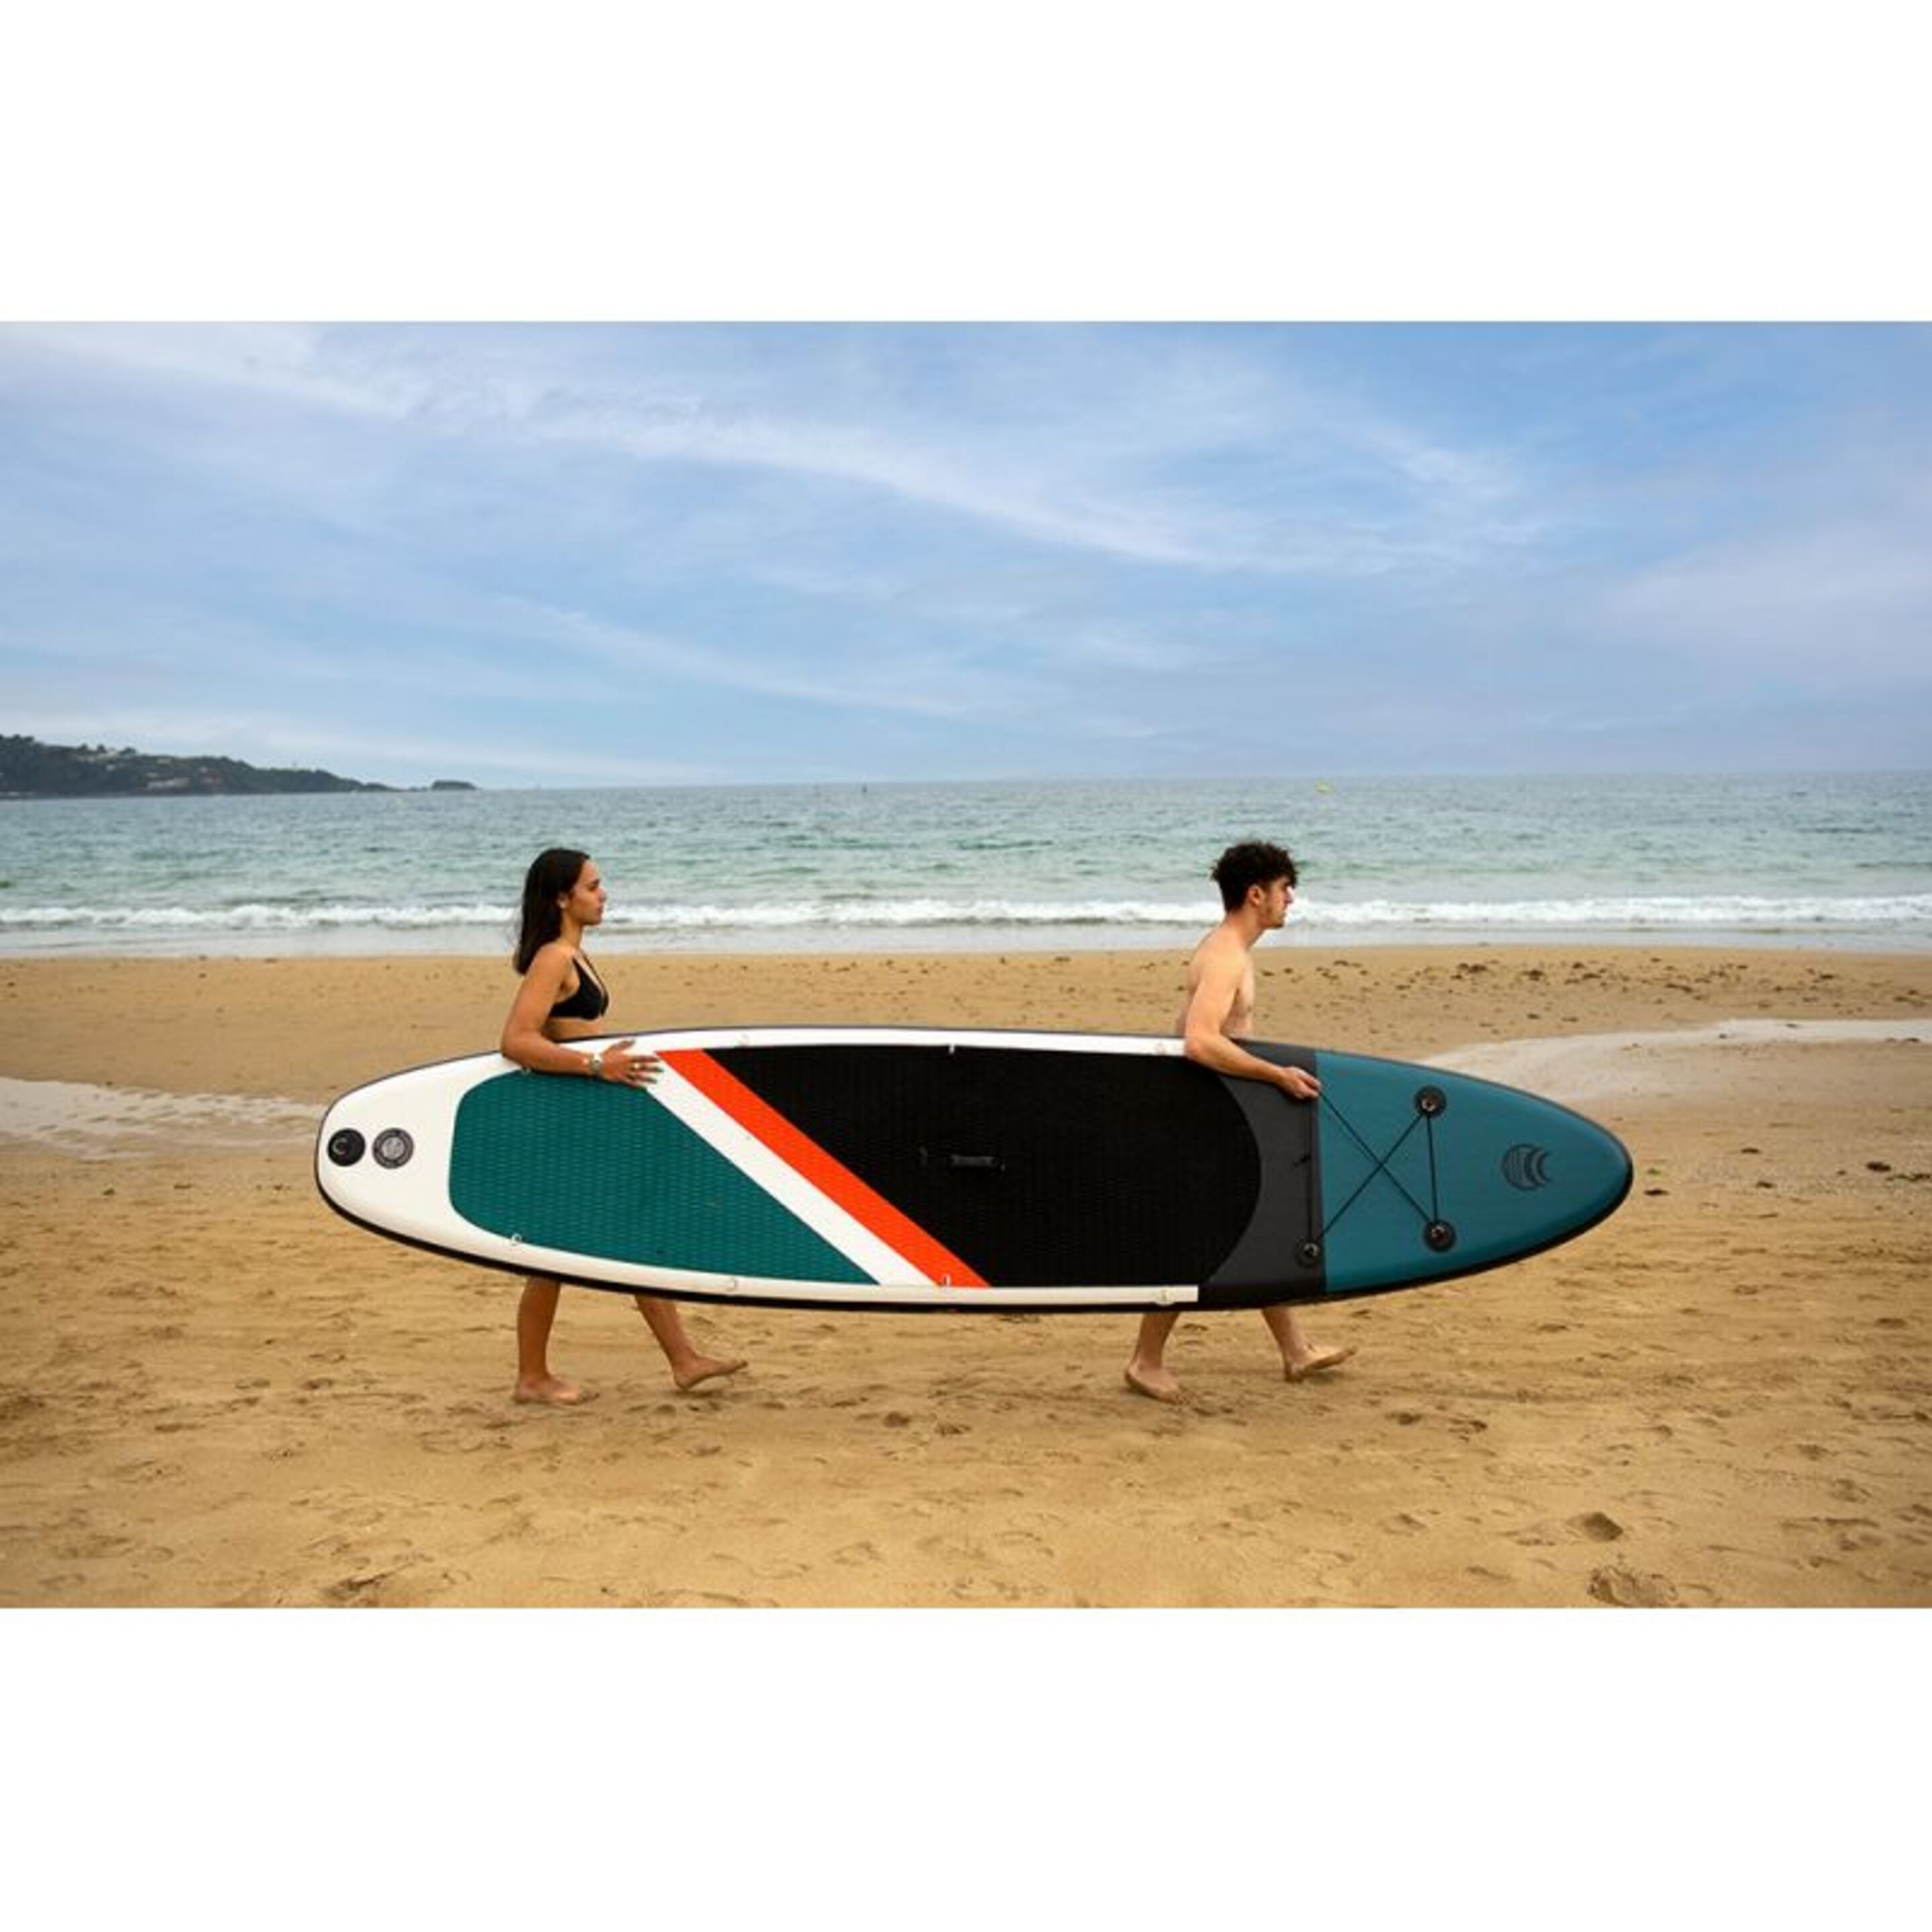 Tabla Paddle Surf Hinchable Adrn Two 12' Con Inflador, Remo, Leash Y Mochila - azul - 